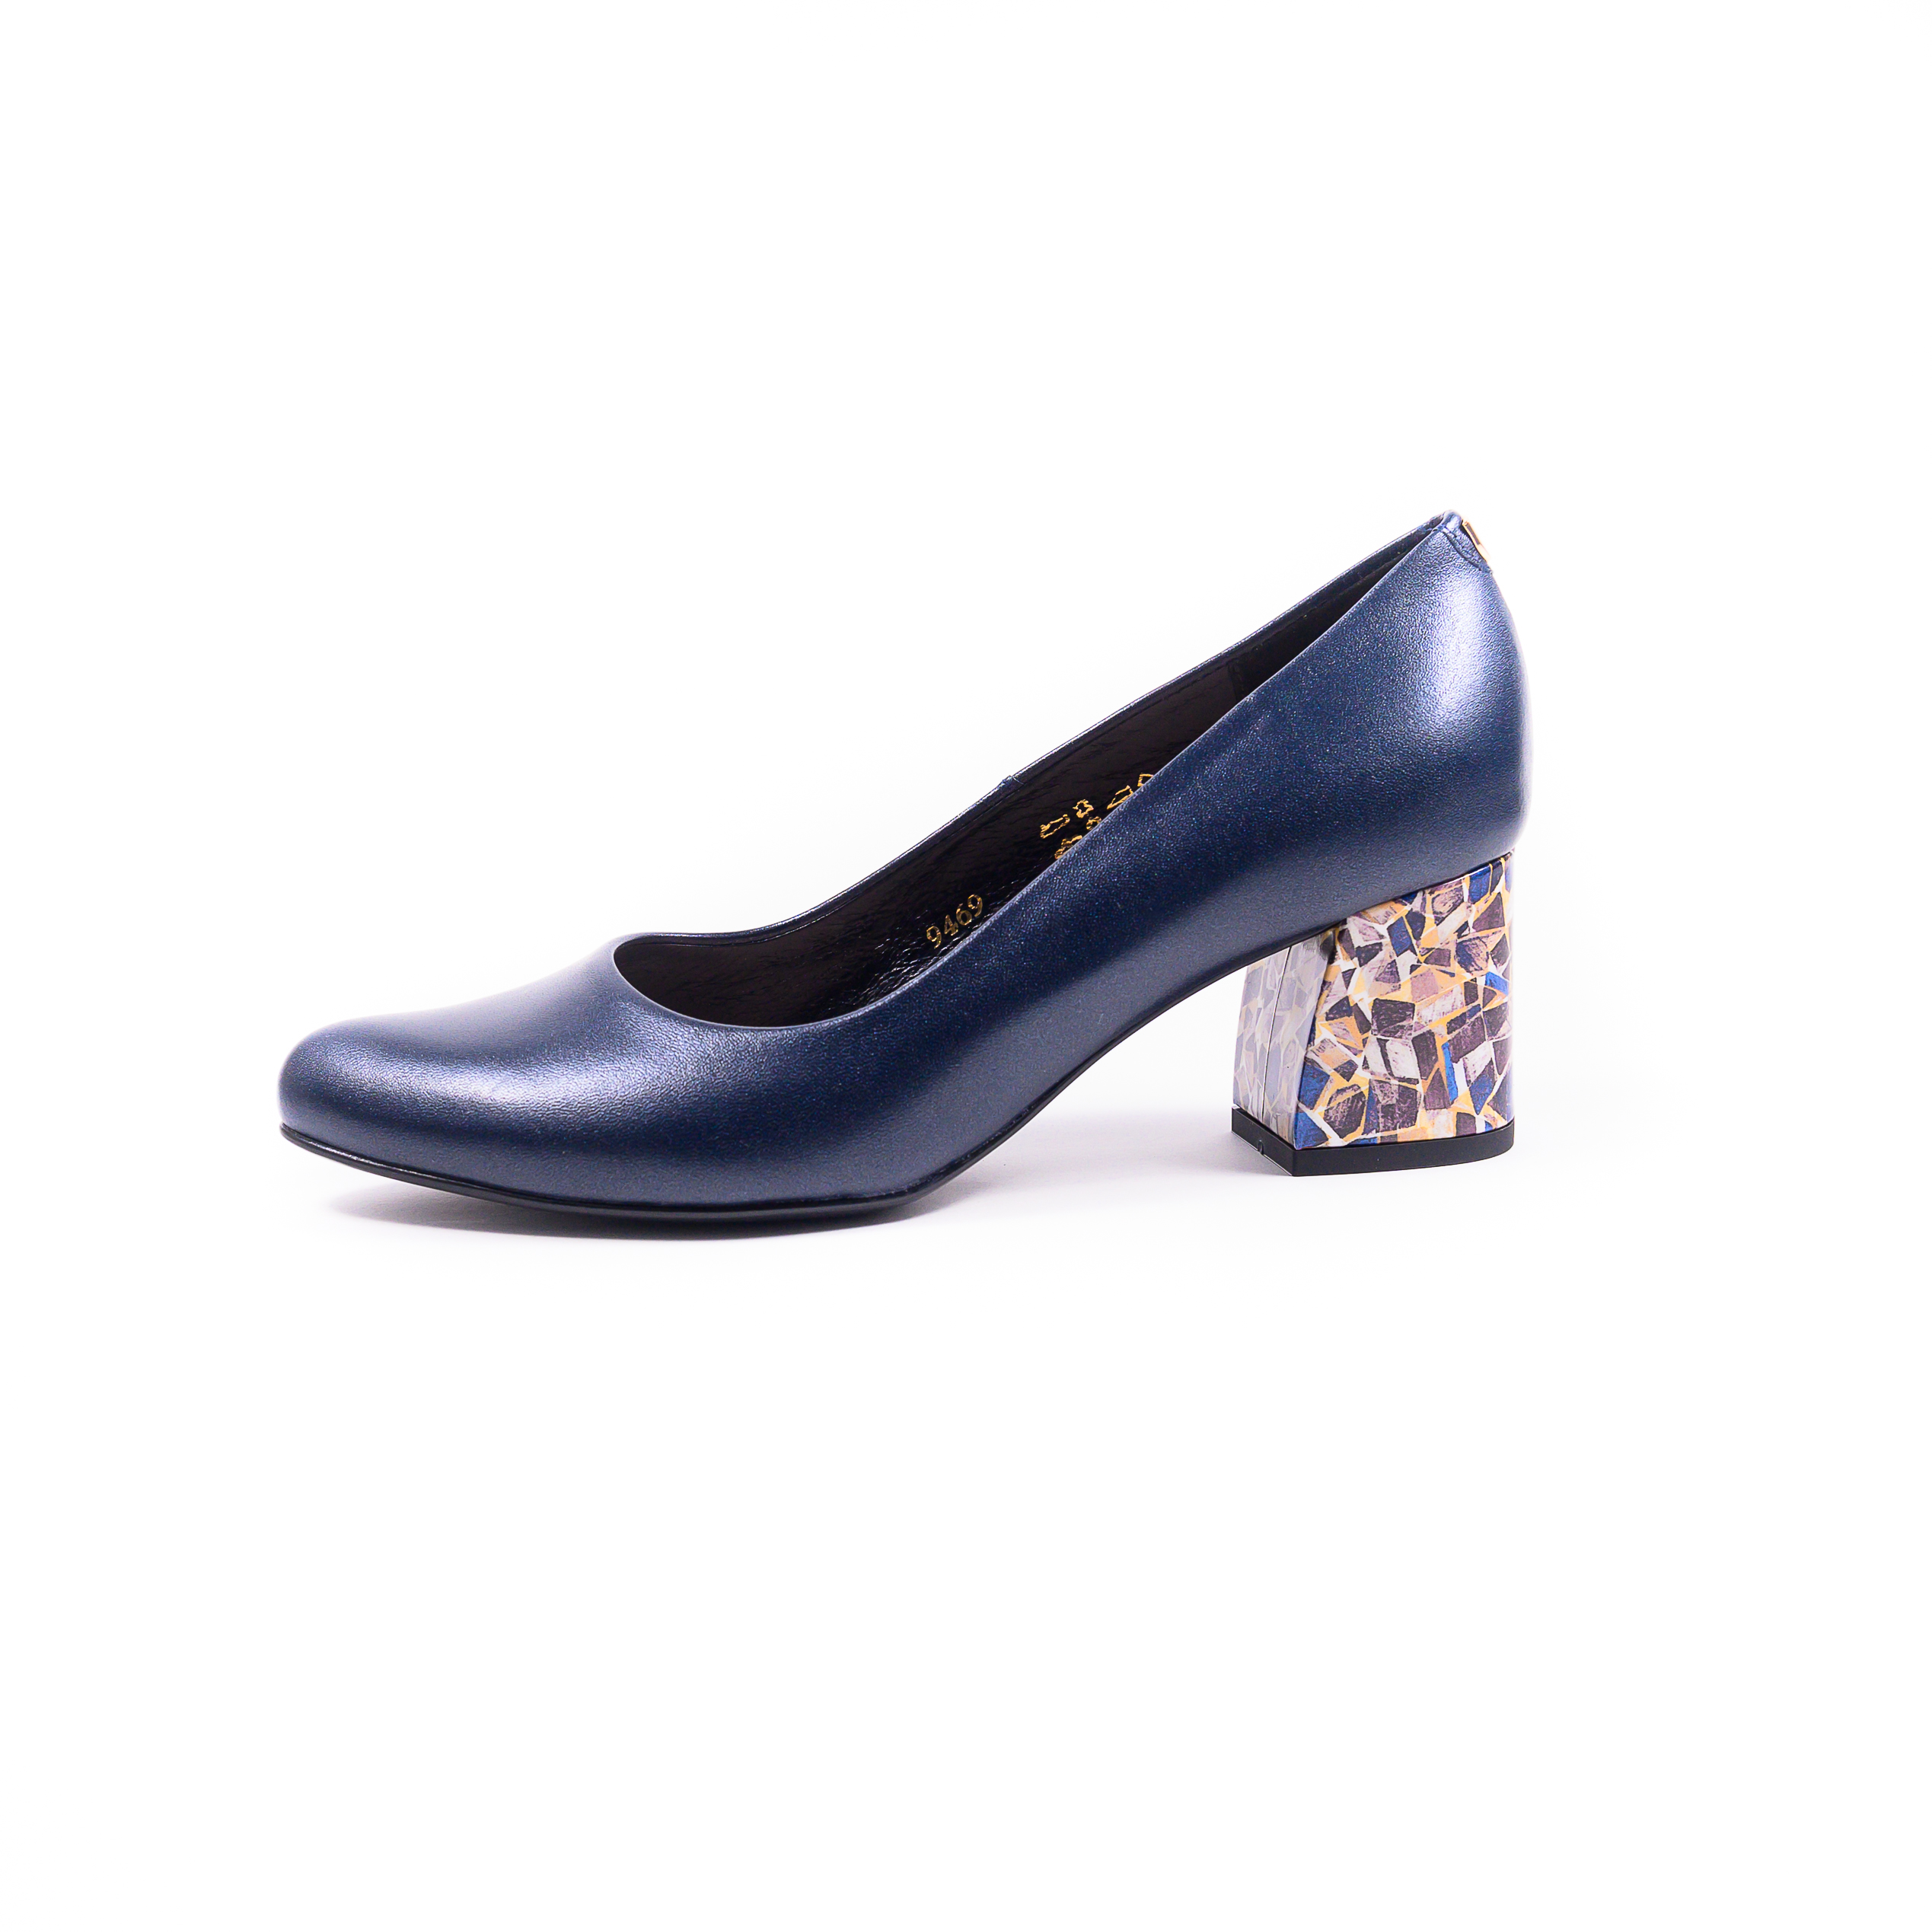 Gaseous To separate sketch Pantofi eleganti dama din piele naturala de culoare albastru si toc de 6 cm.  - Bottino